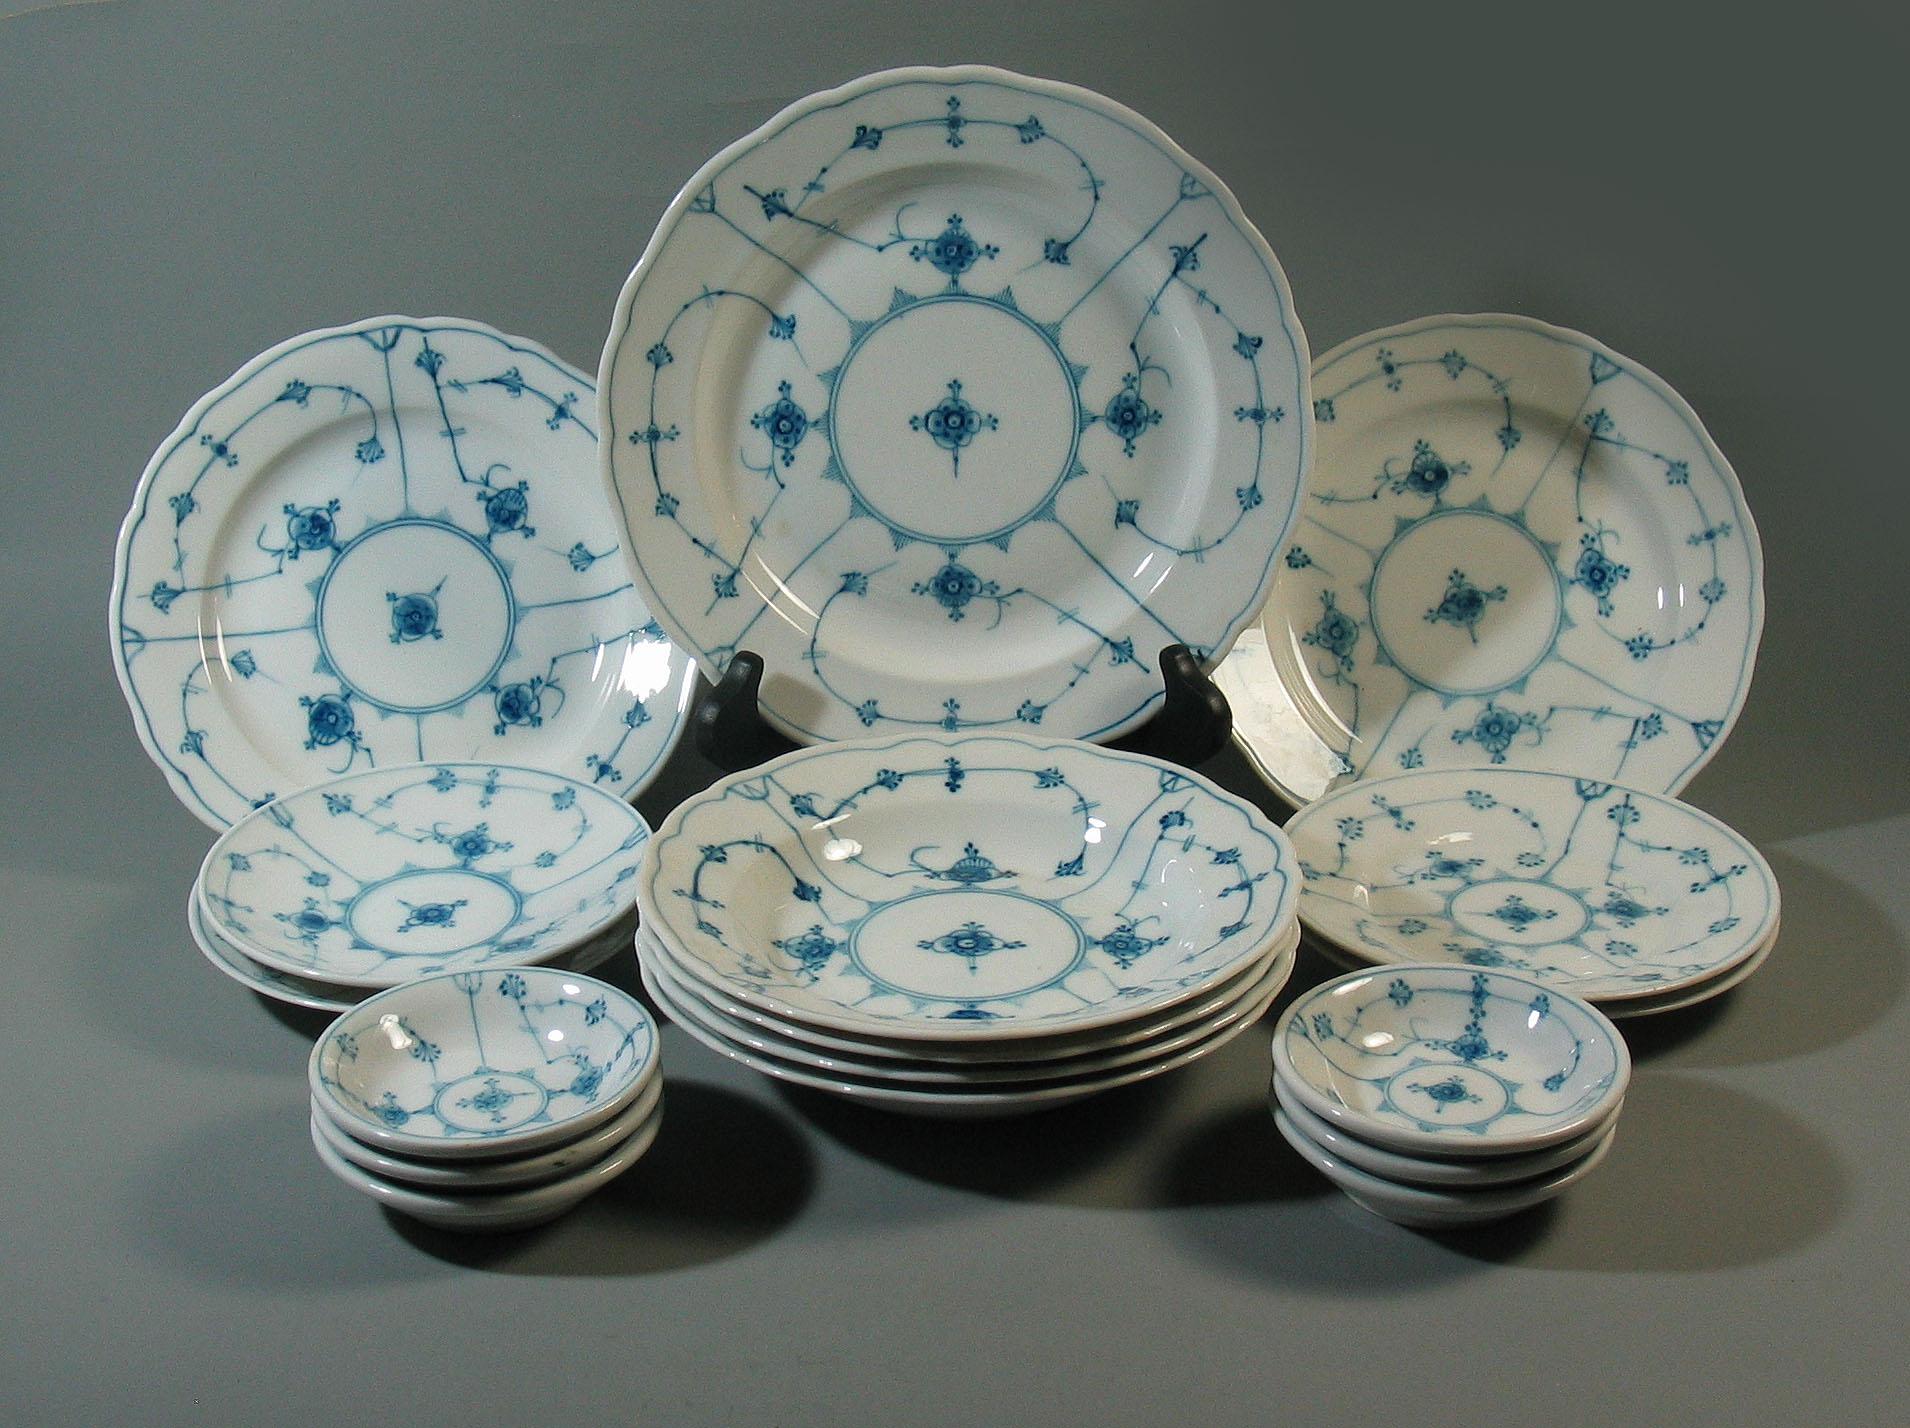 International Style Lot of 17 Porsgrund Hand Painted Porcelain Plates in “Bogstad Straw” Pattern